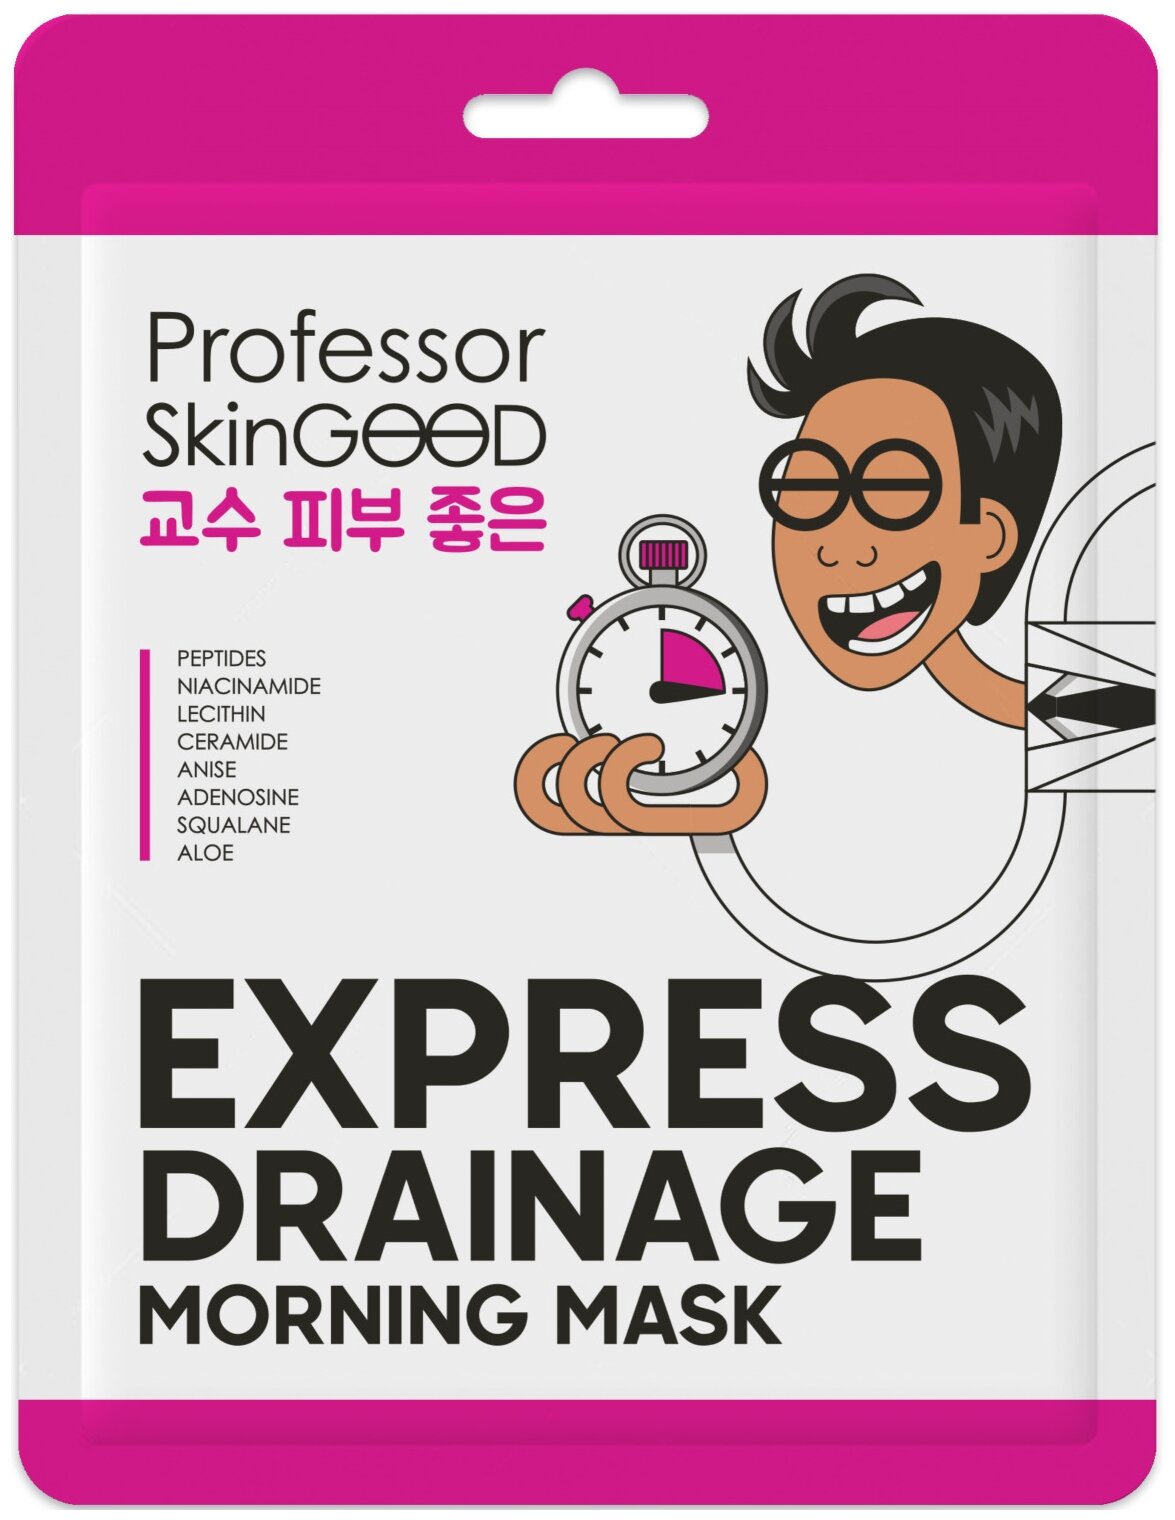 Professor SkinGOOD Утренняя маска для лица Drainage Mask 1шт